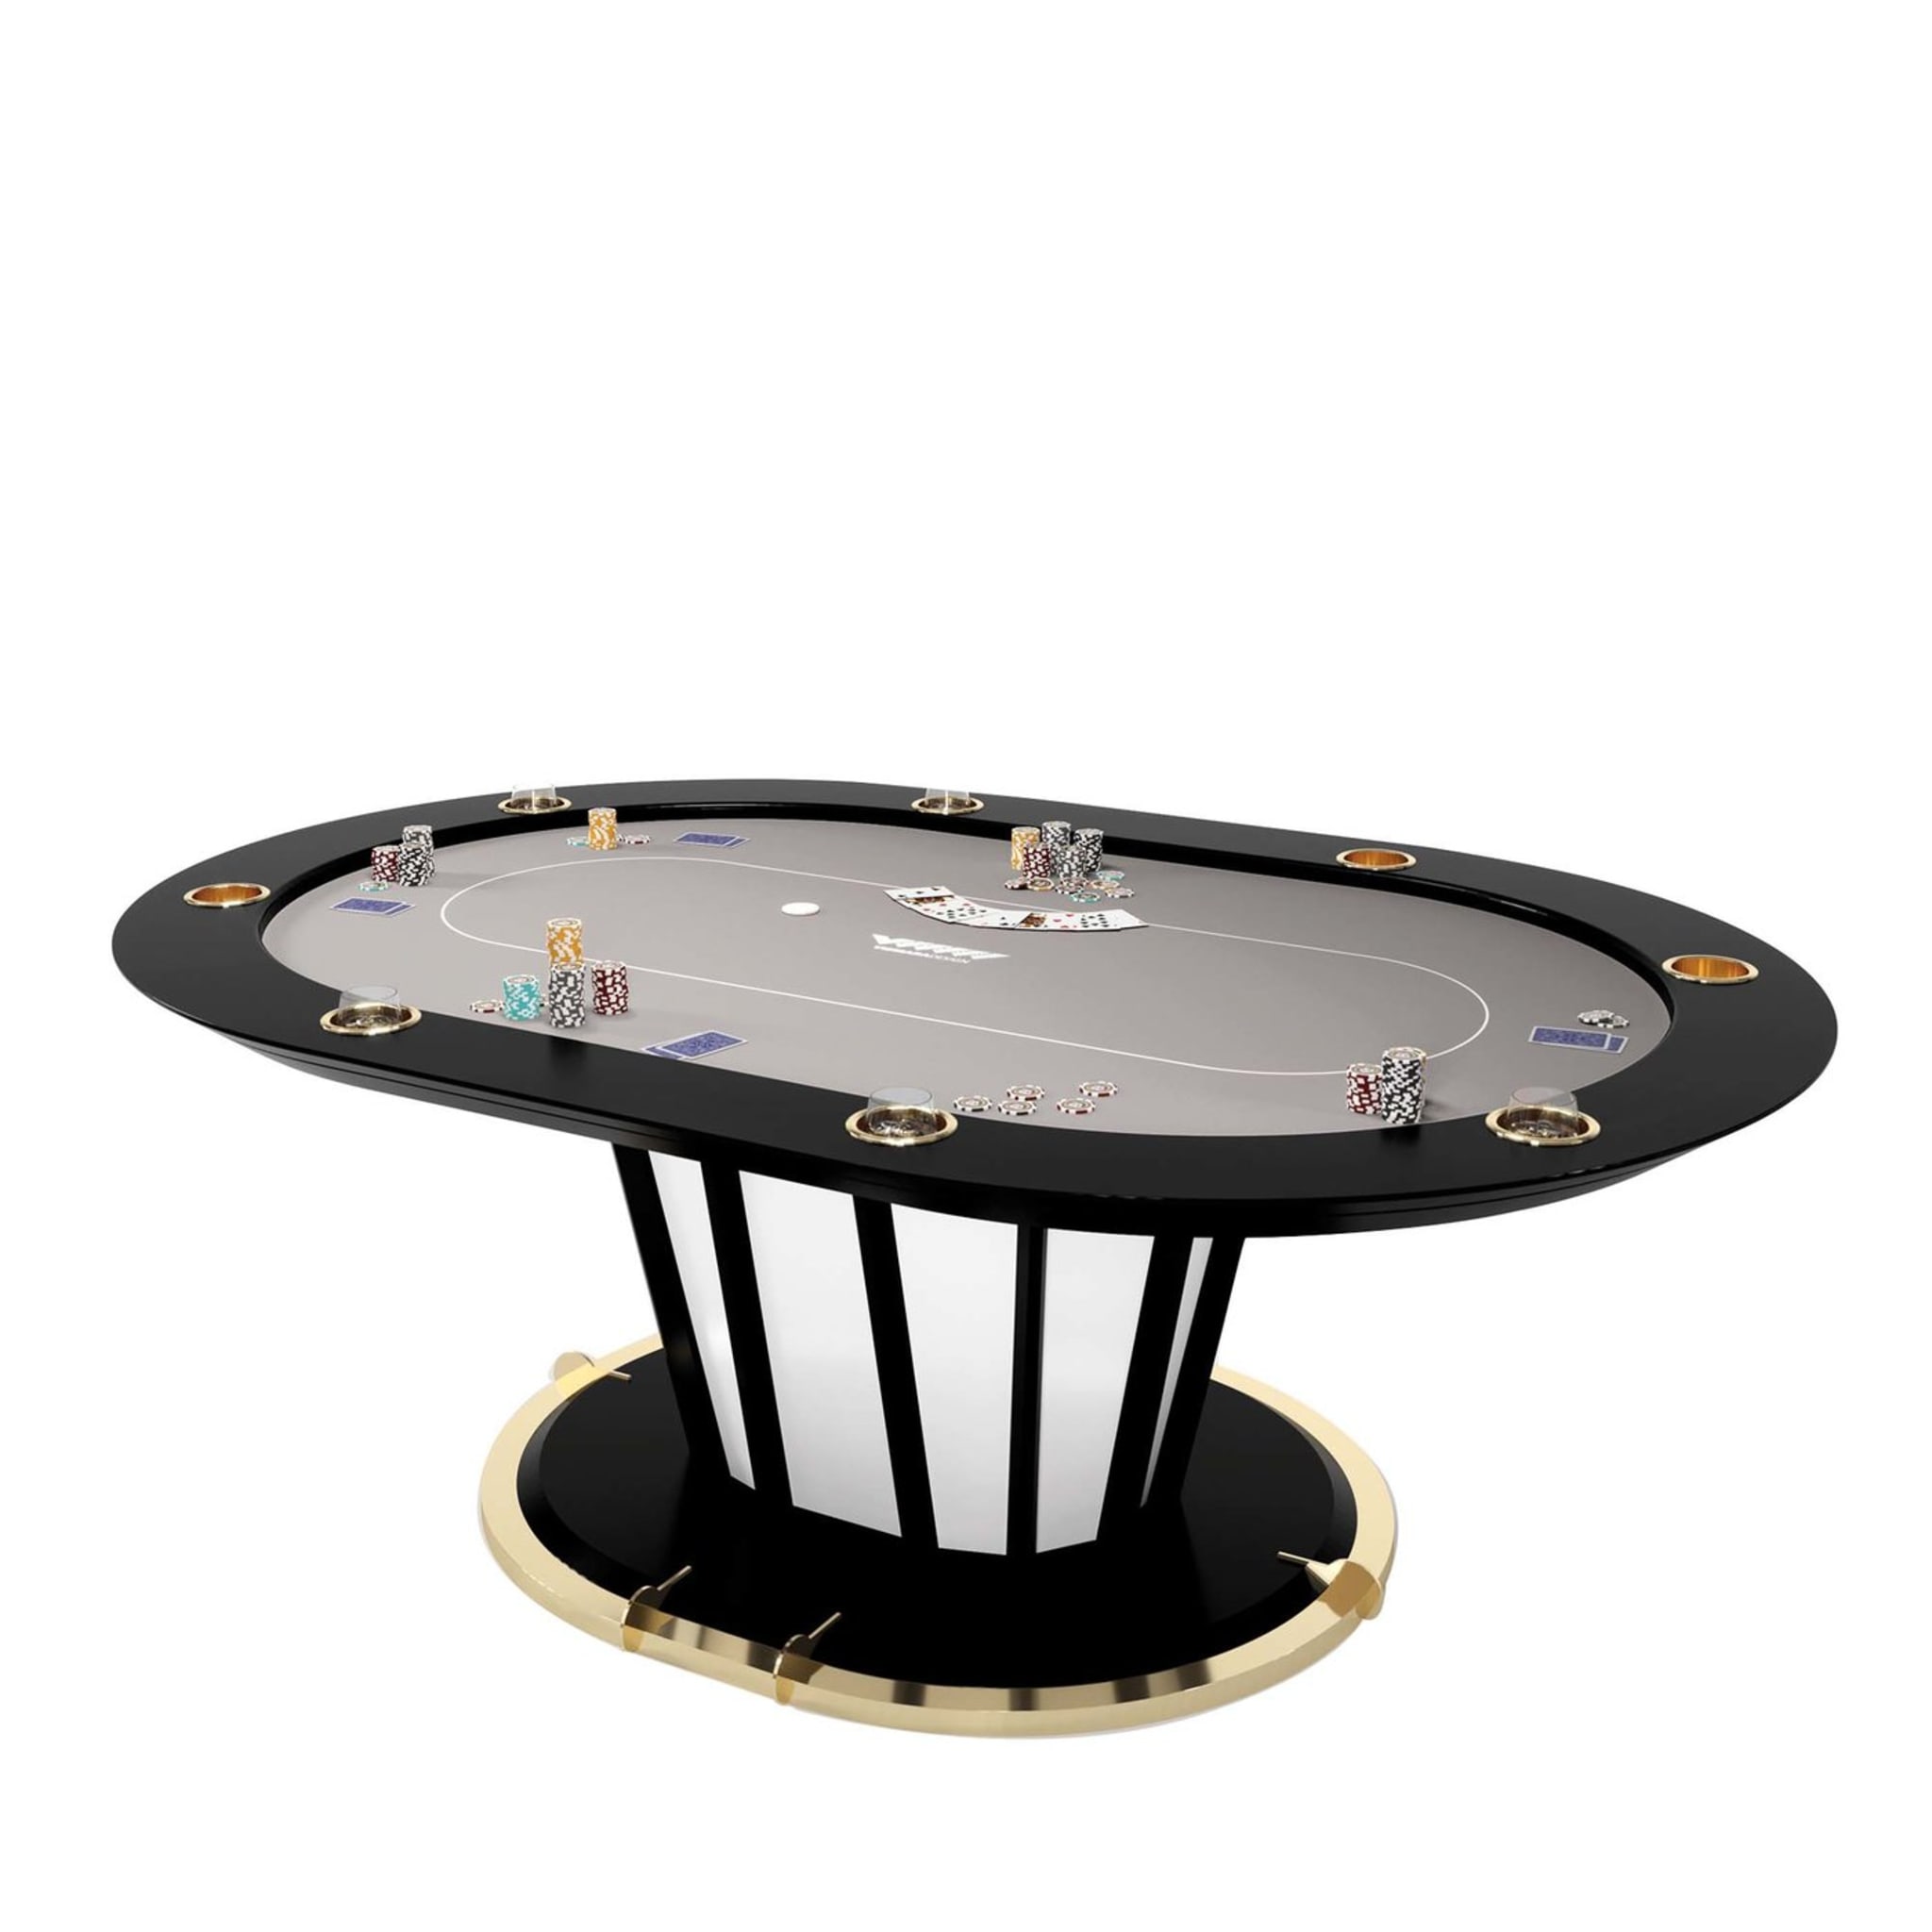 Desire Poker table 219 by Pino Vismara - Main view